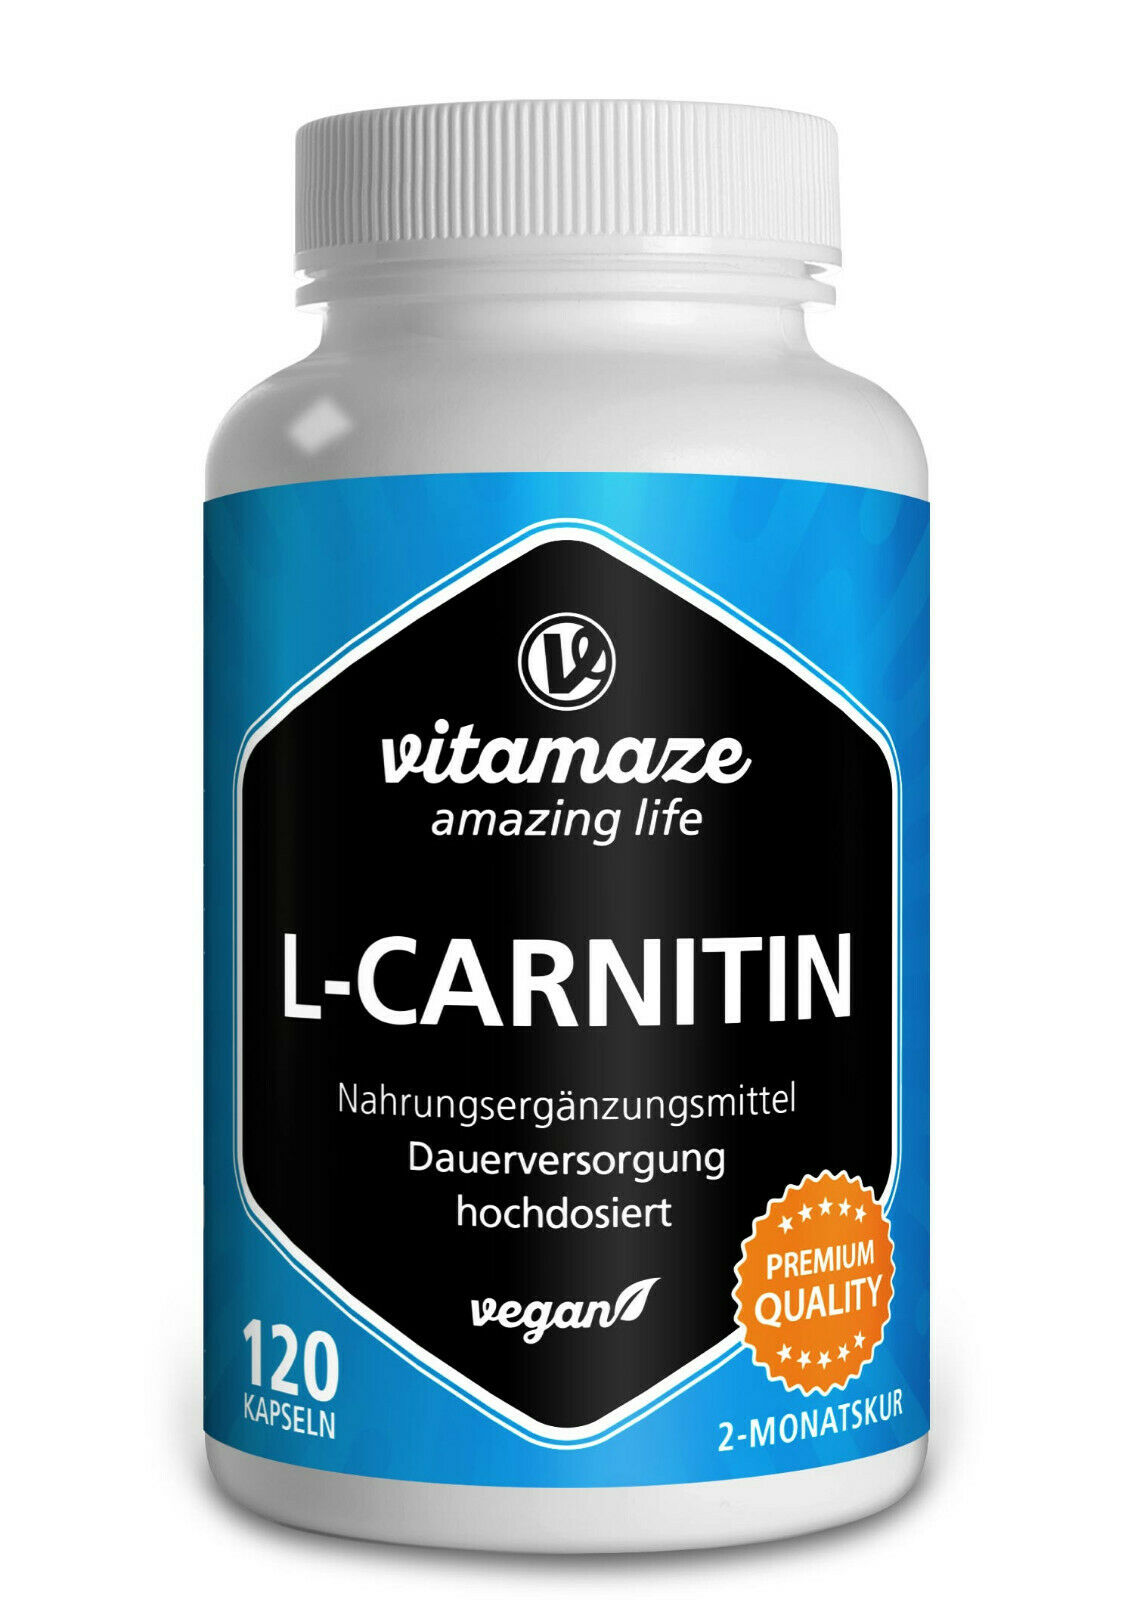 (€25,38/100g) L-carnitin Hochdosiert Als 120 Kapseln Für Fatburner Diät Vegan